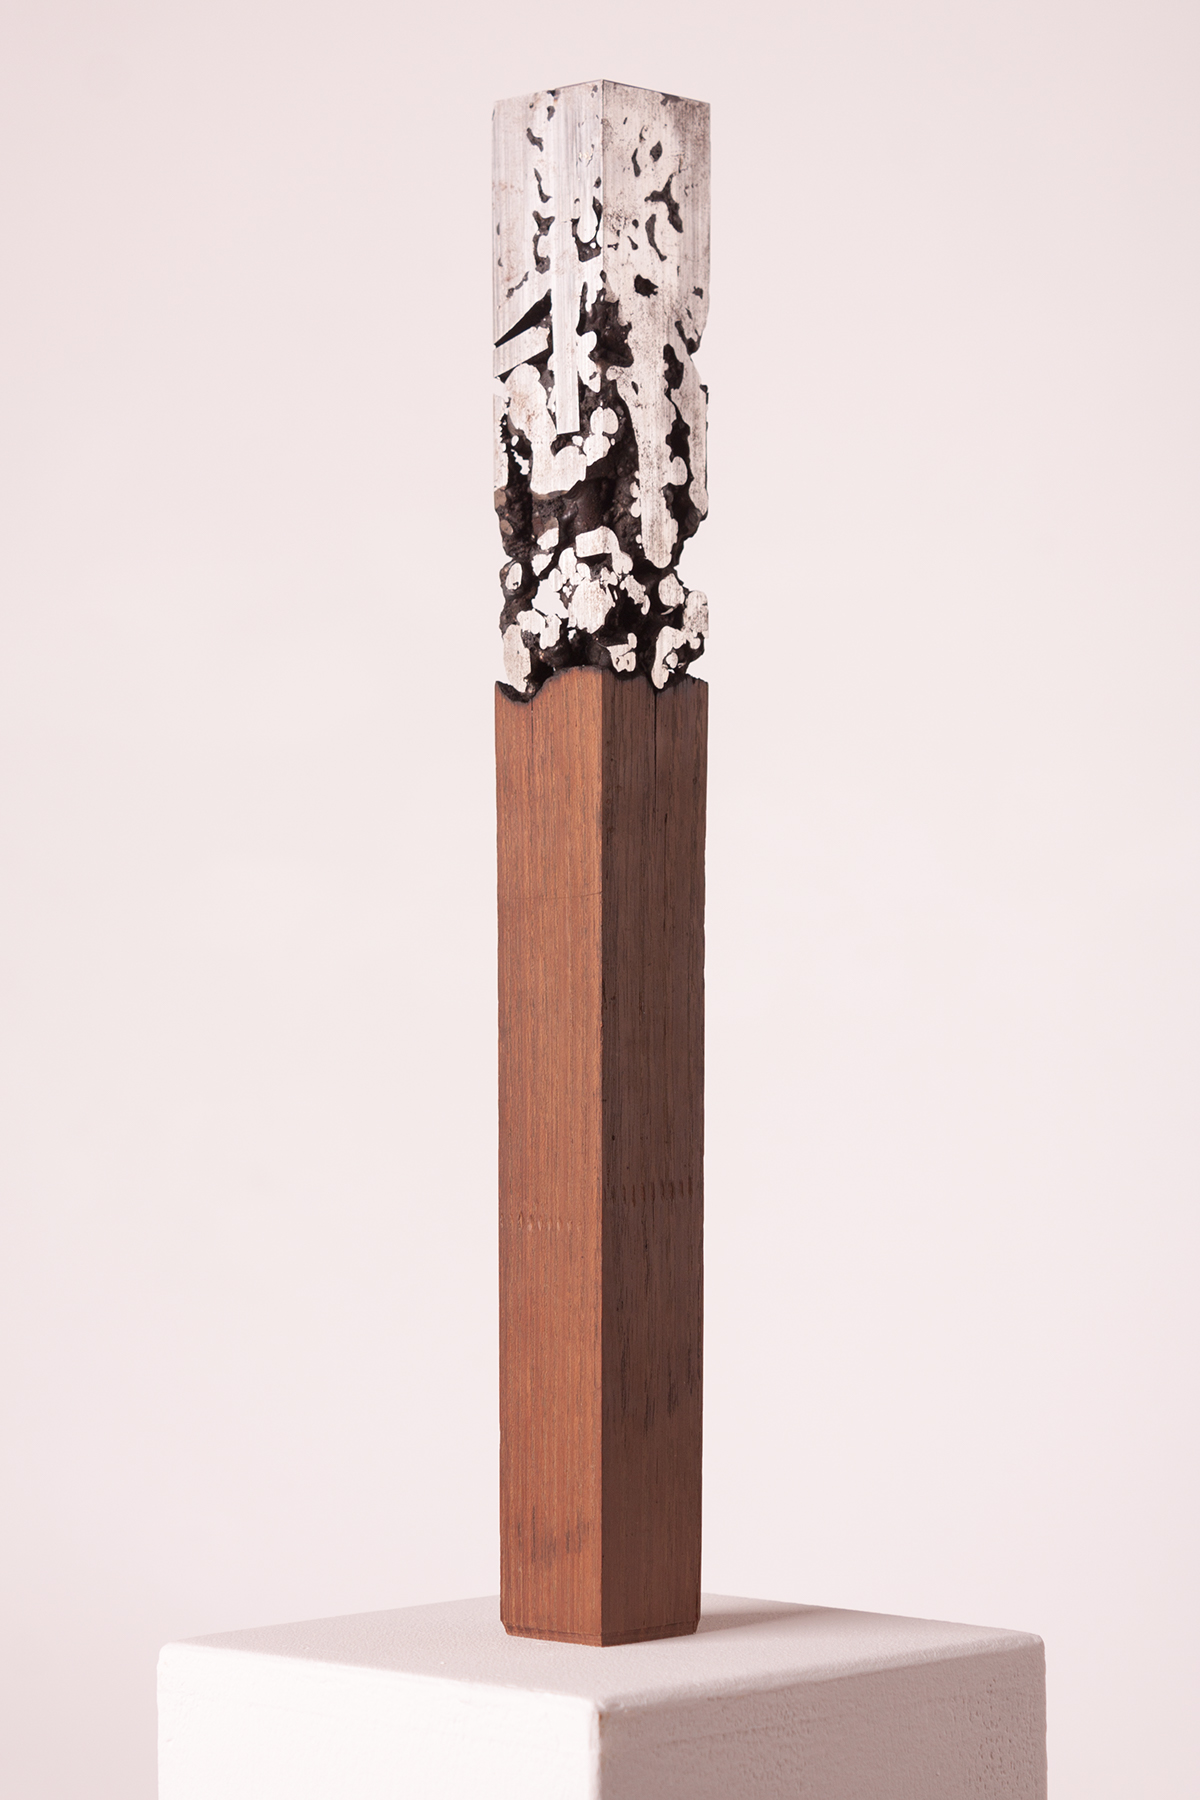 sculpture ARBONIUM wood steel iron art concept arts personal project